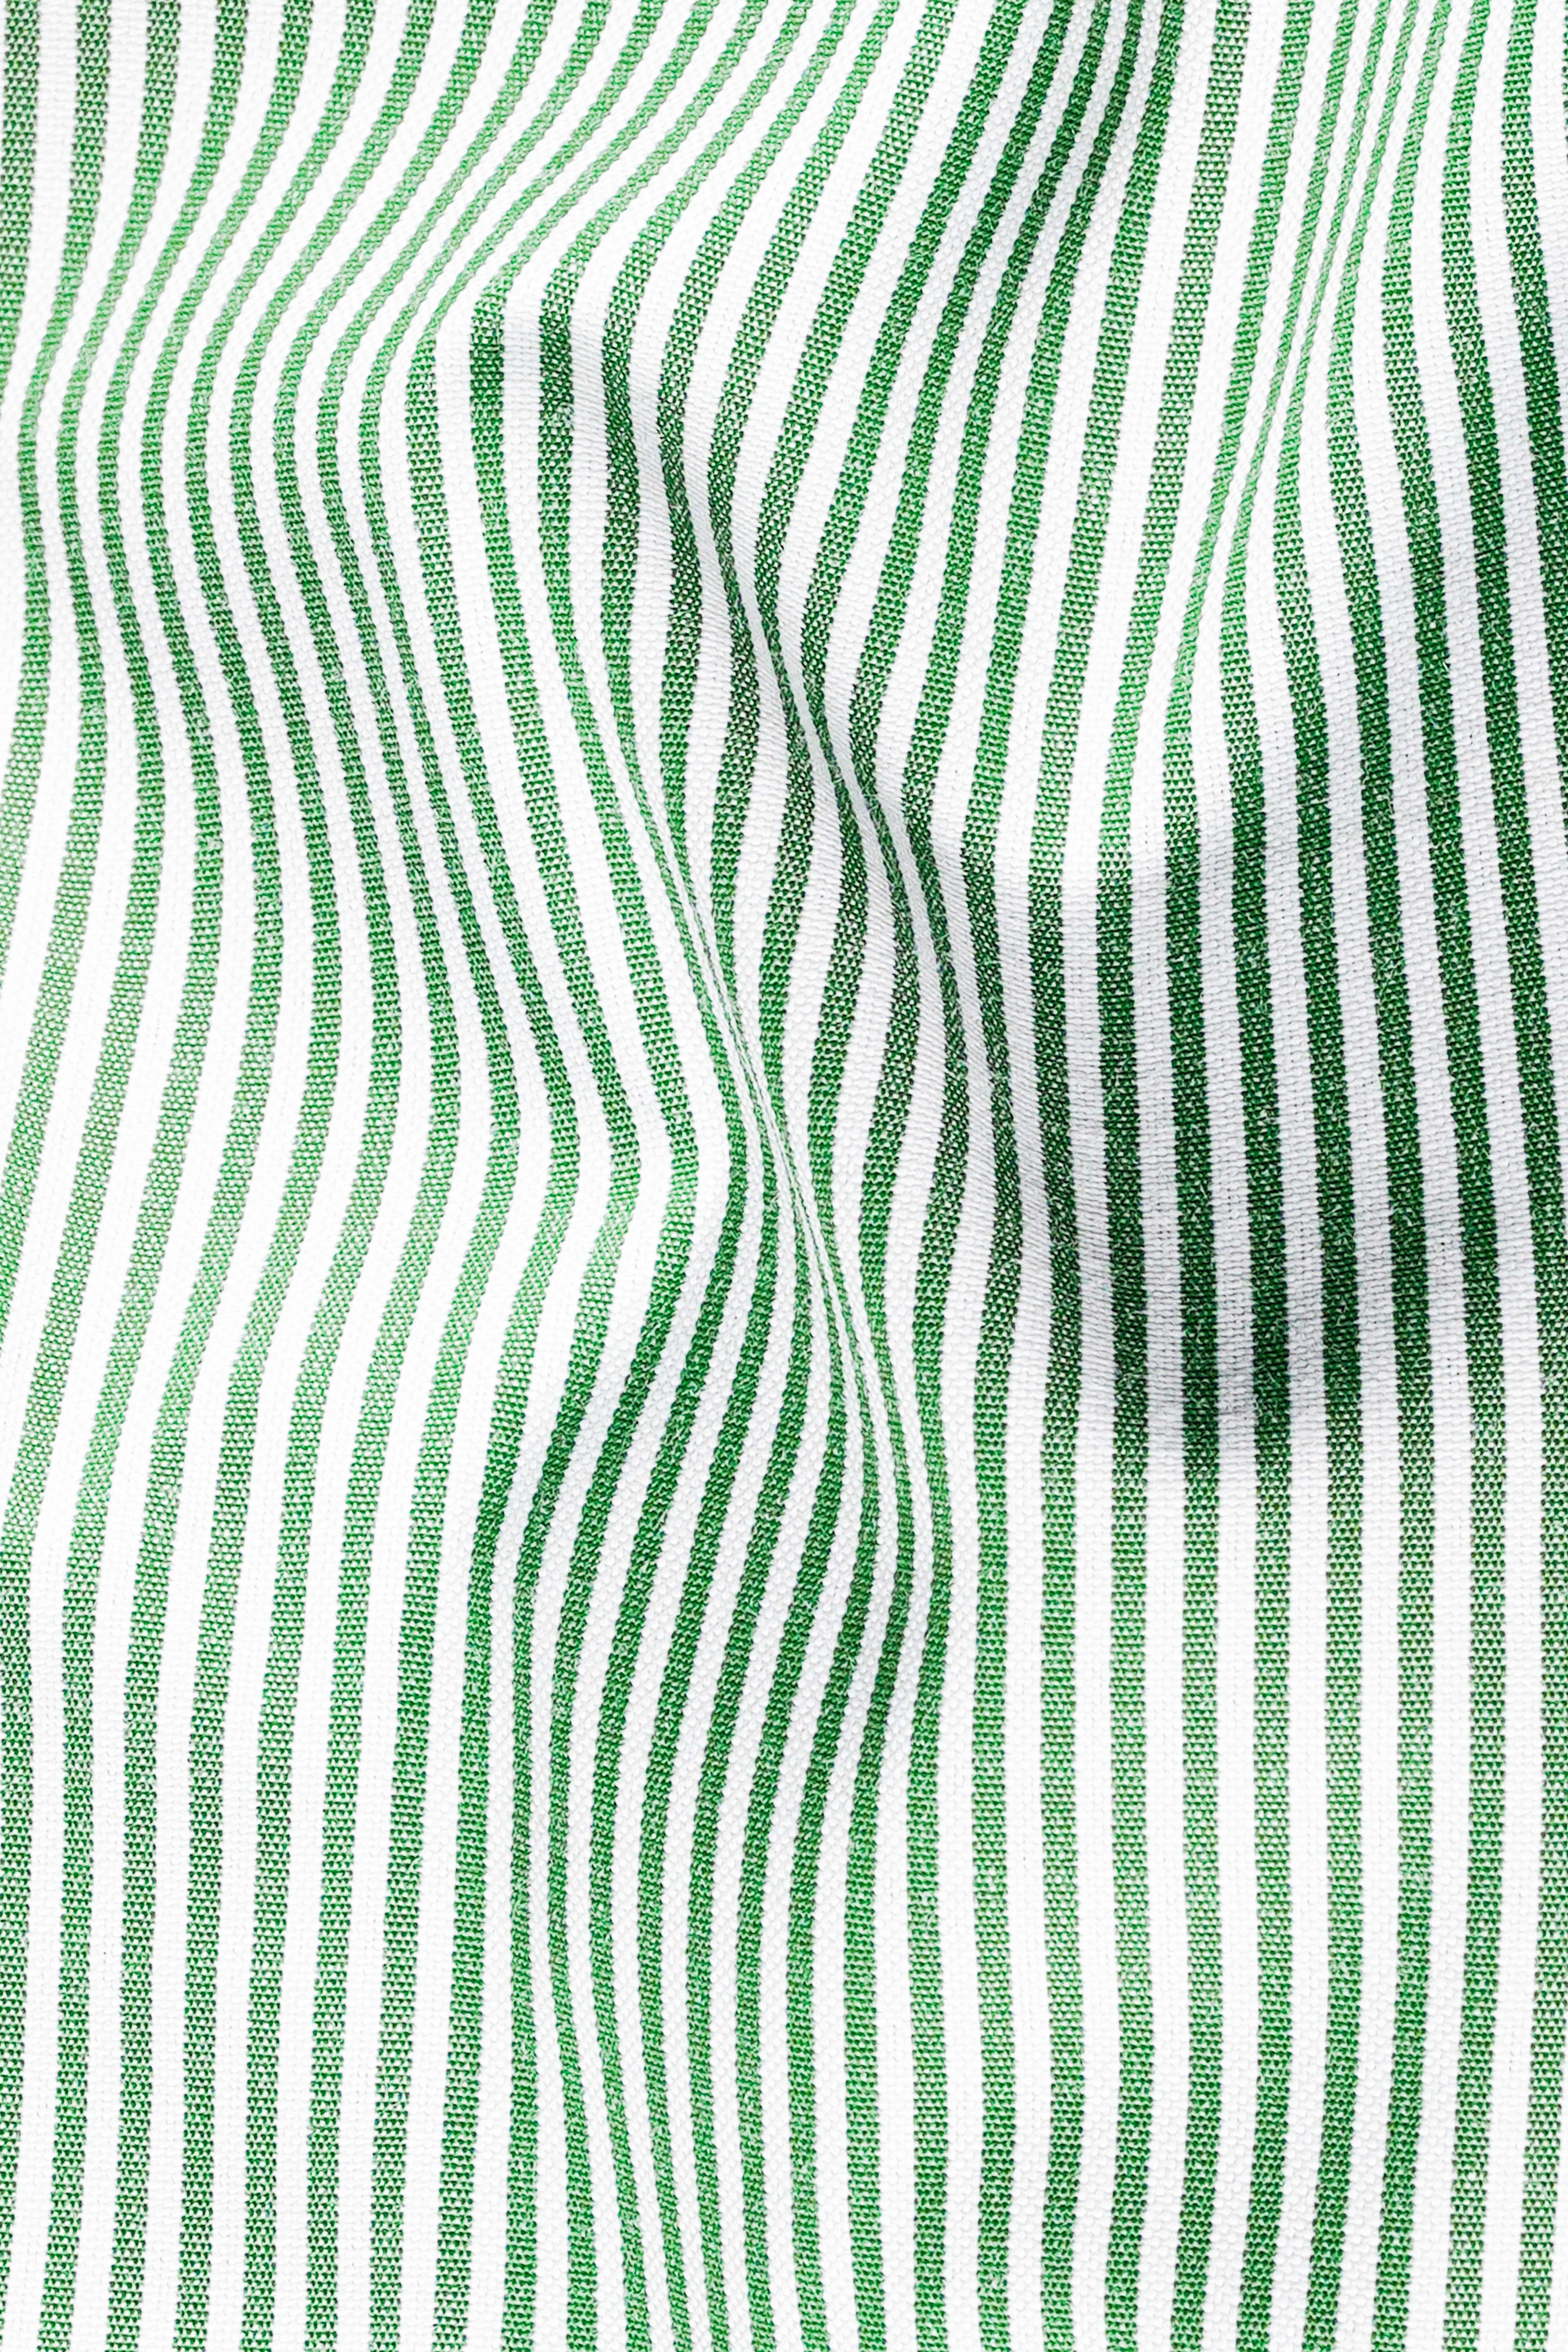 Salem Green and White Striped Premium Cotton Shirt